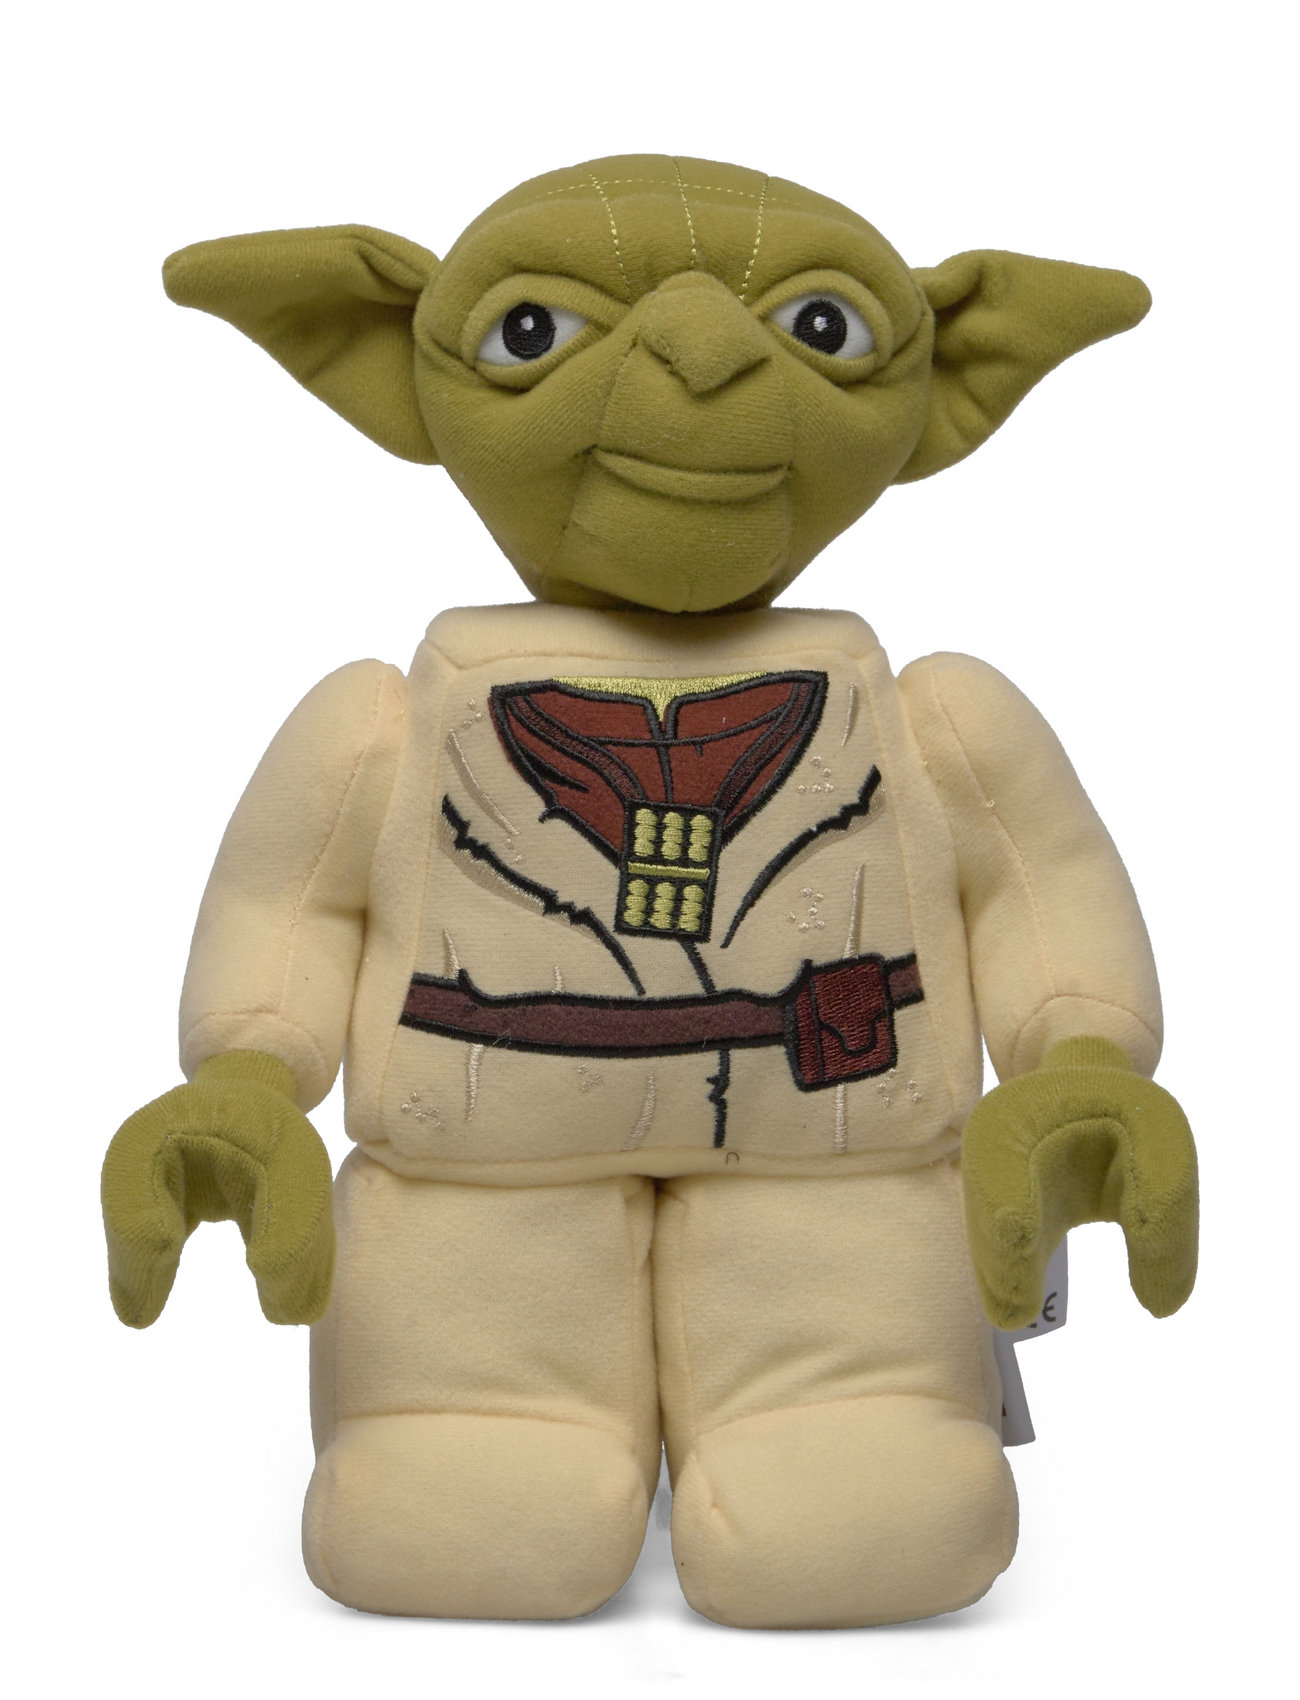 Lego Star Wars Yoda Plush Toy Toys Soft Toys Stuffed Toys Multi/patterned Star Wars